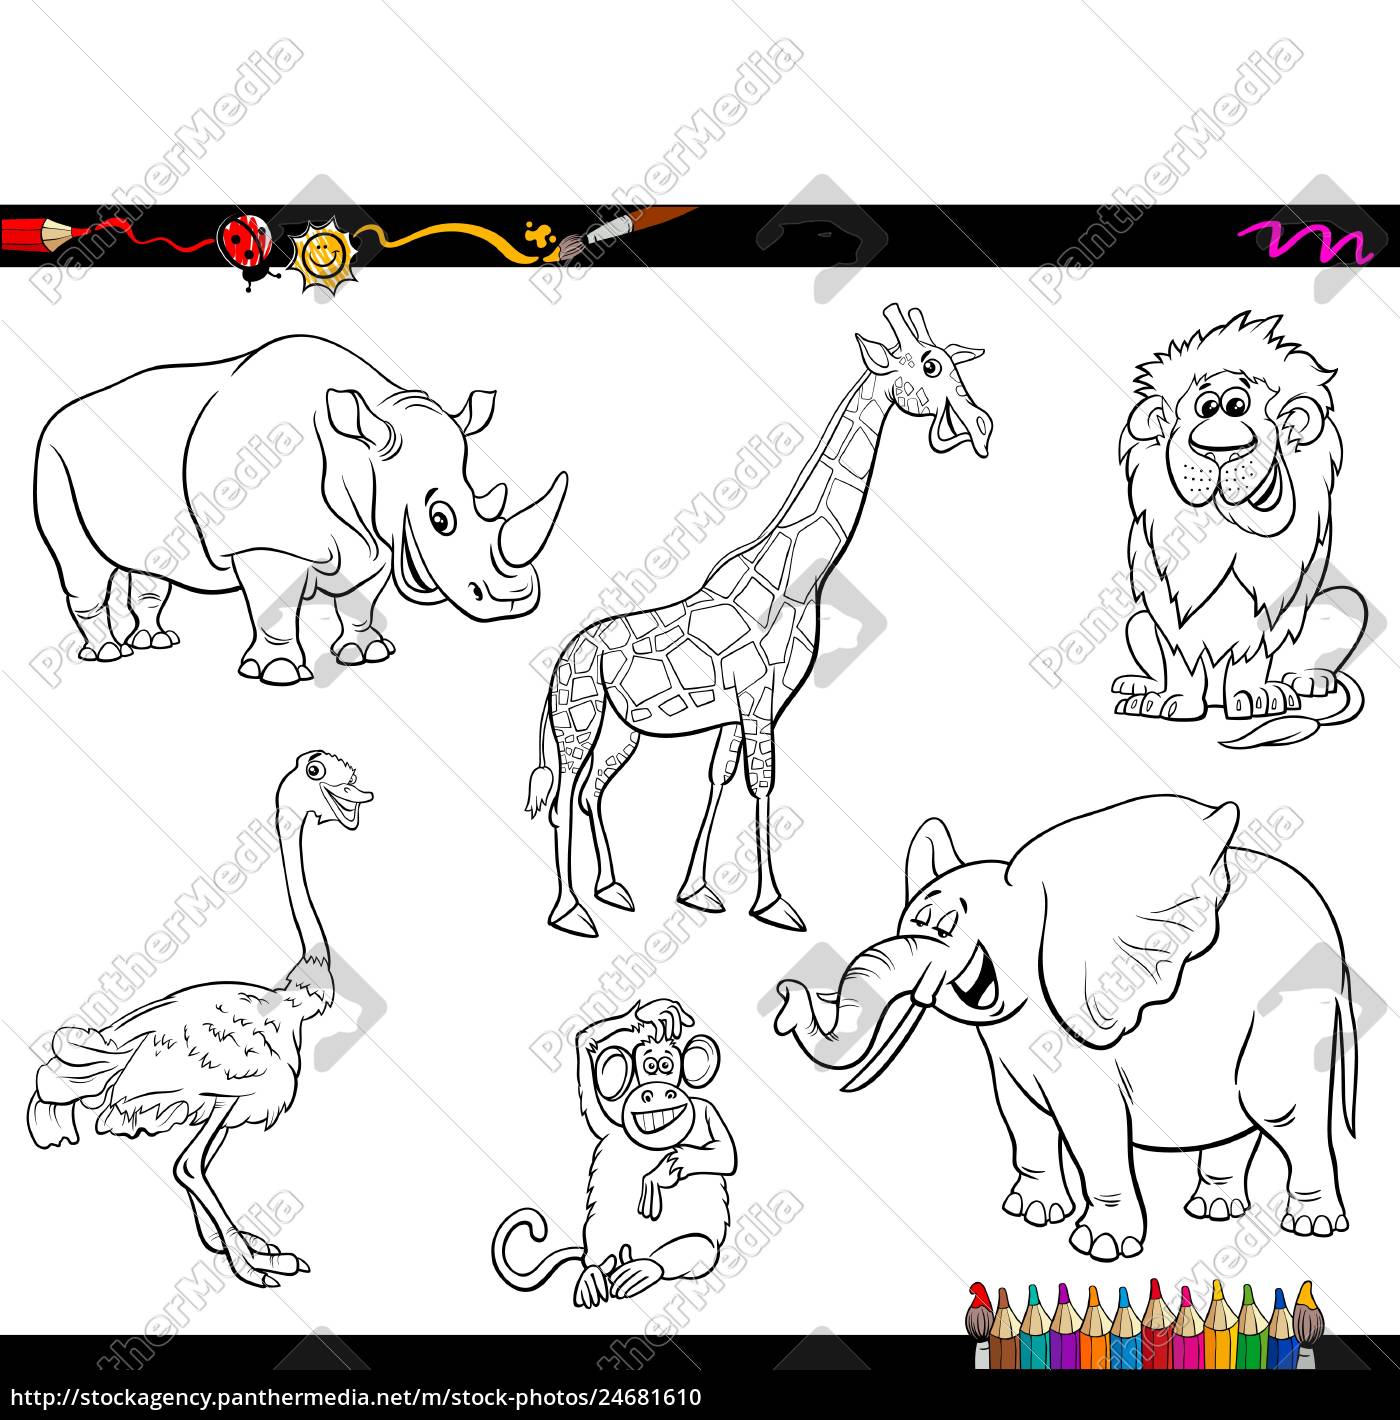 safari cartoon animal characters coloring book   Stock image ...